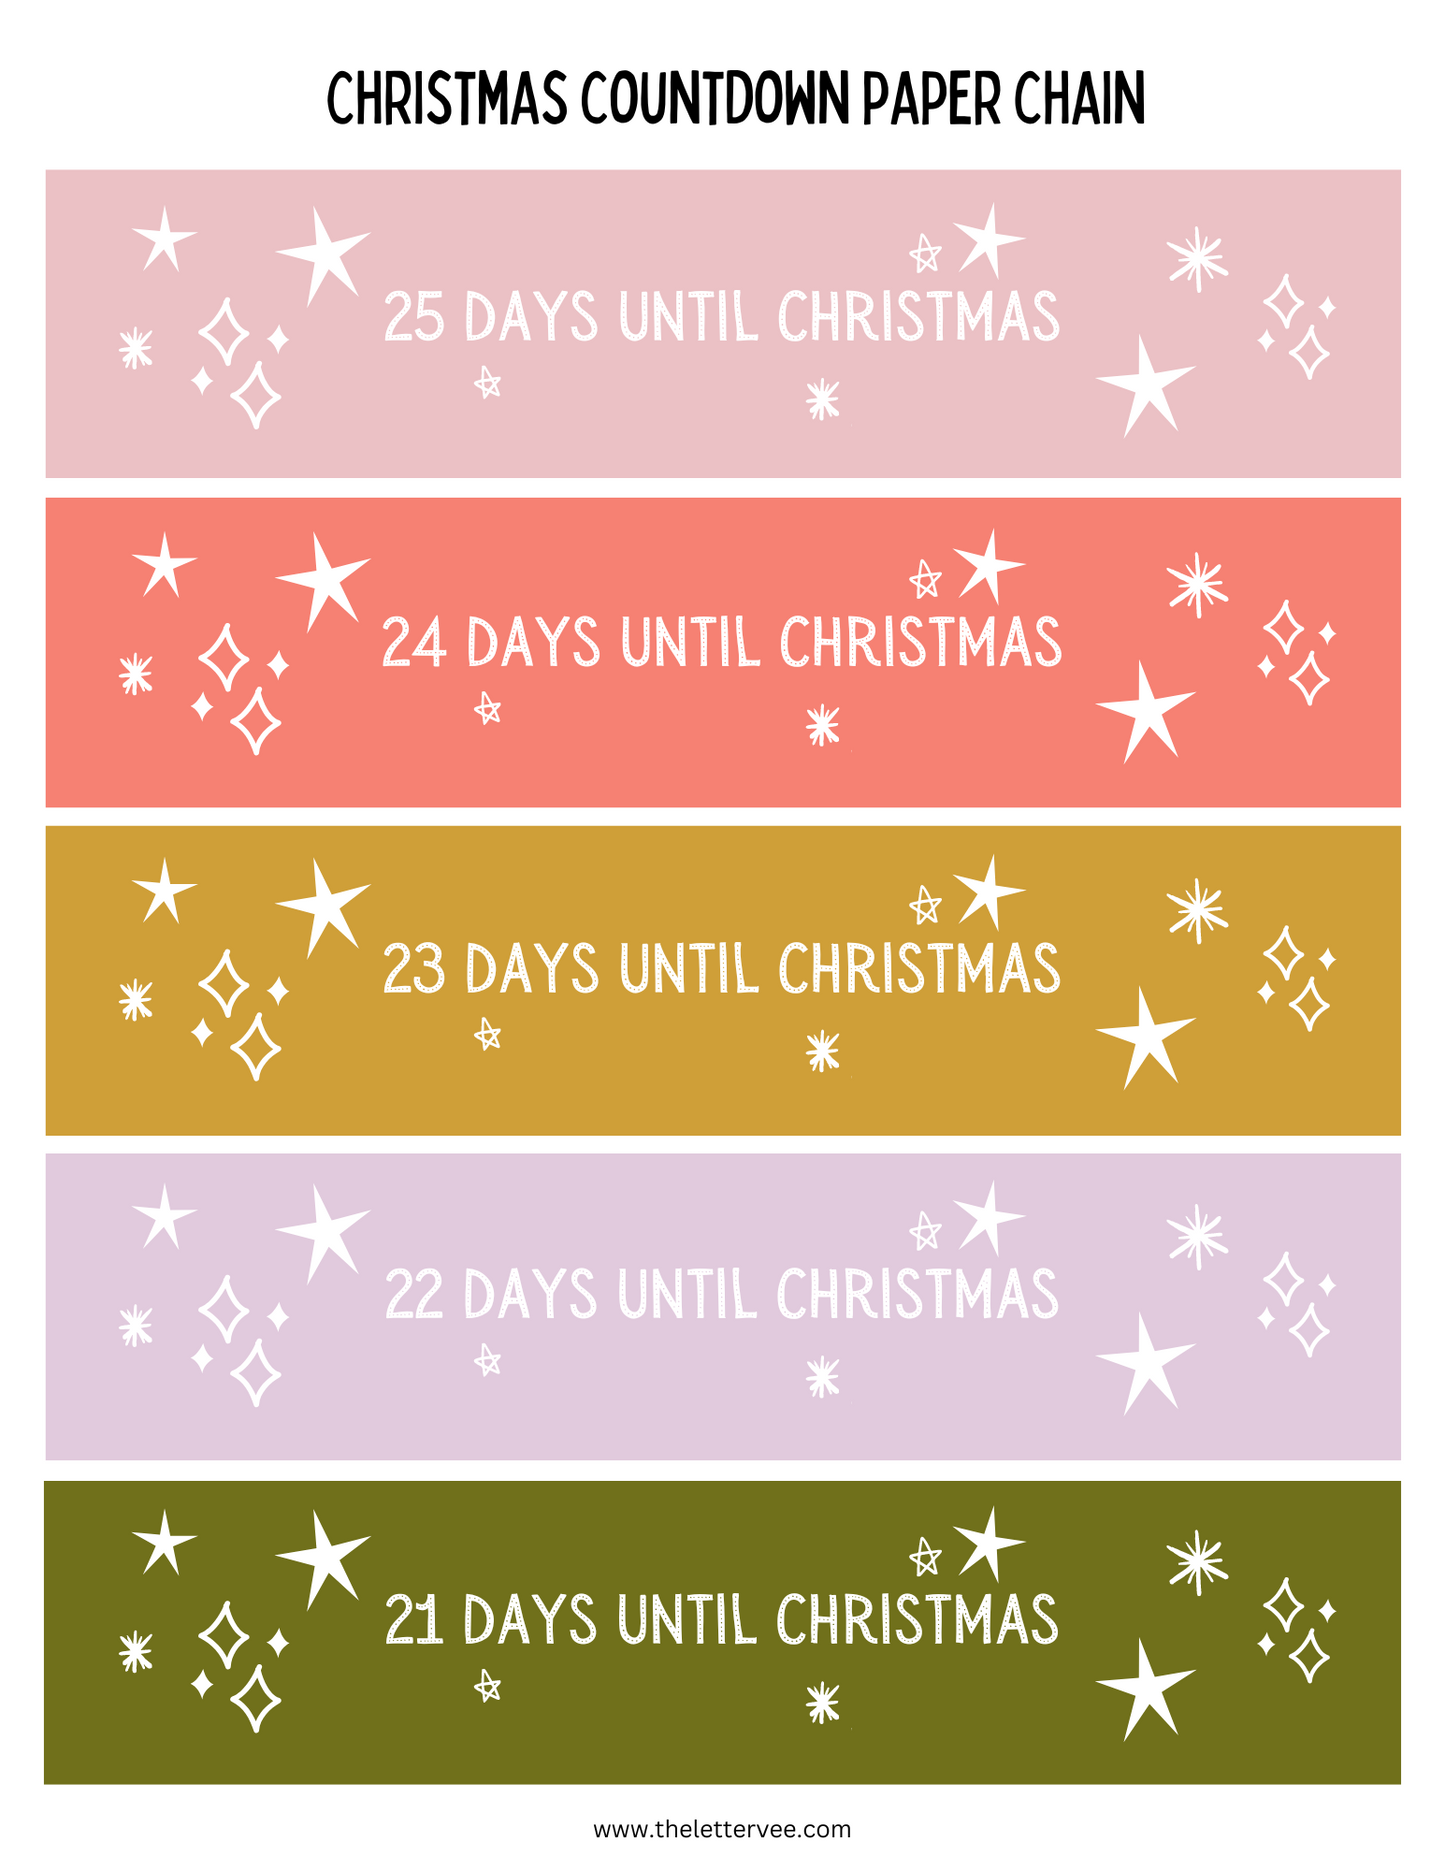 Paper Chain Countdown | Christmas